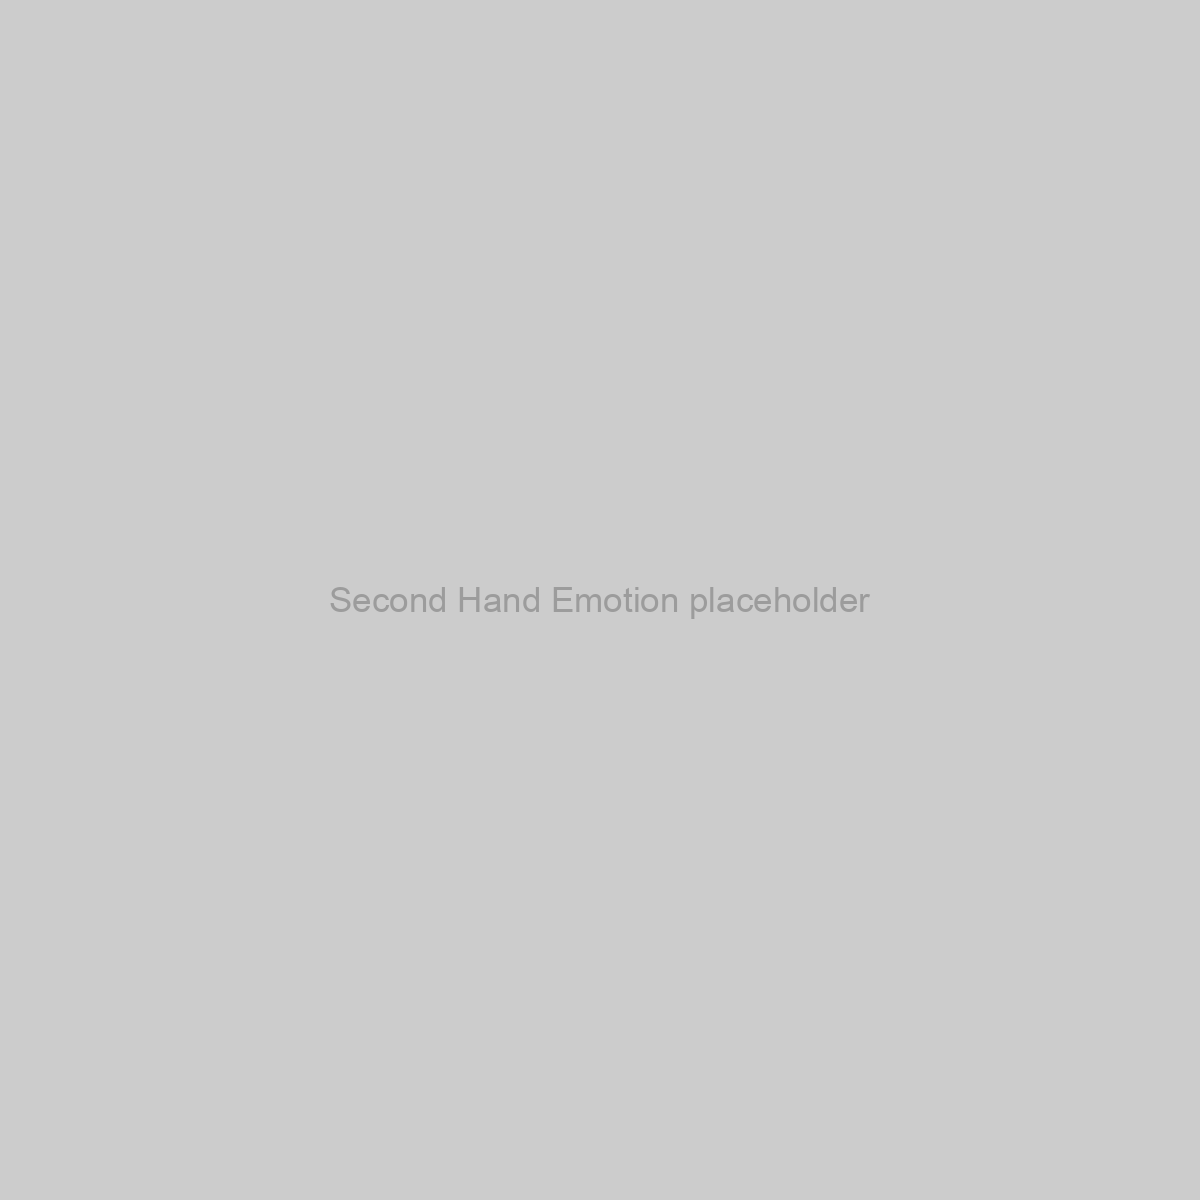 Second Hand Emotion Placeholder Image